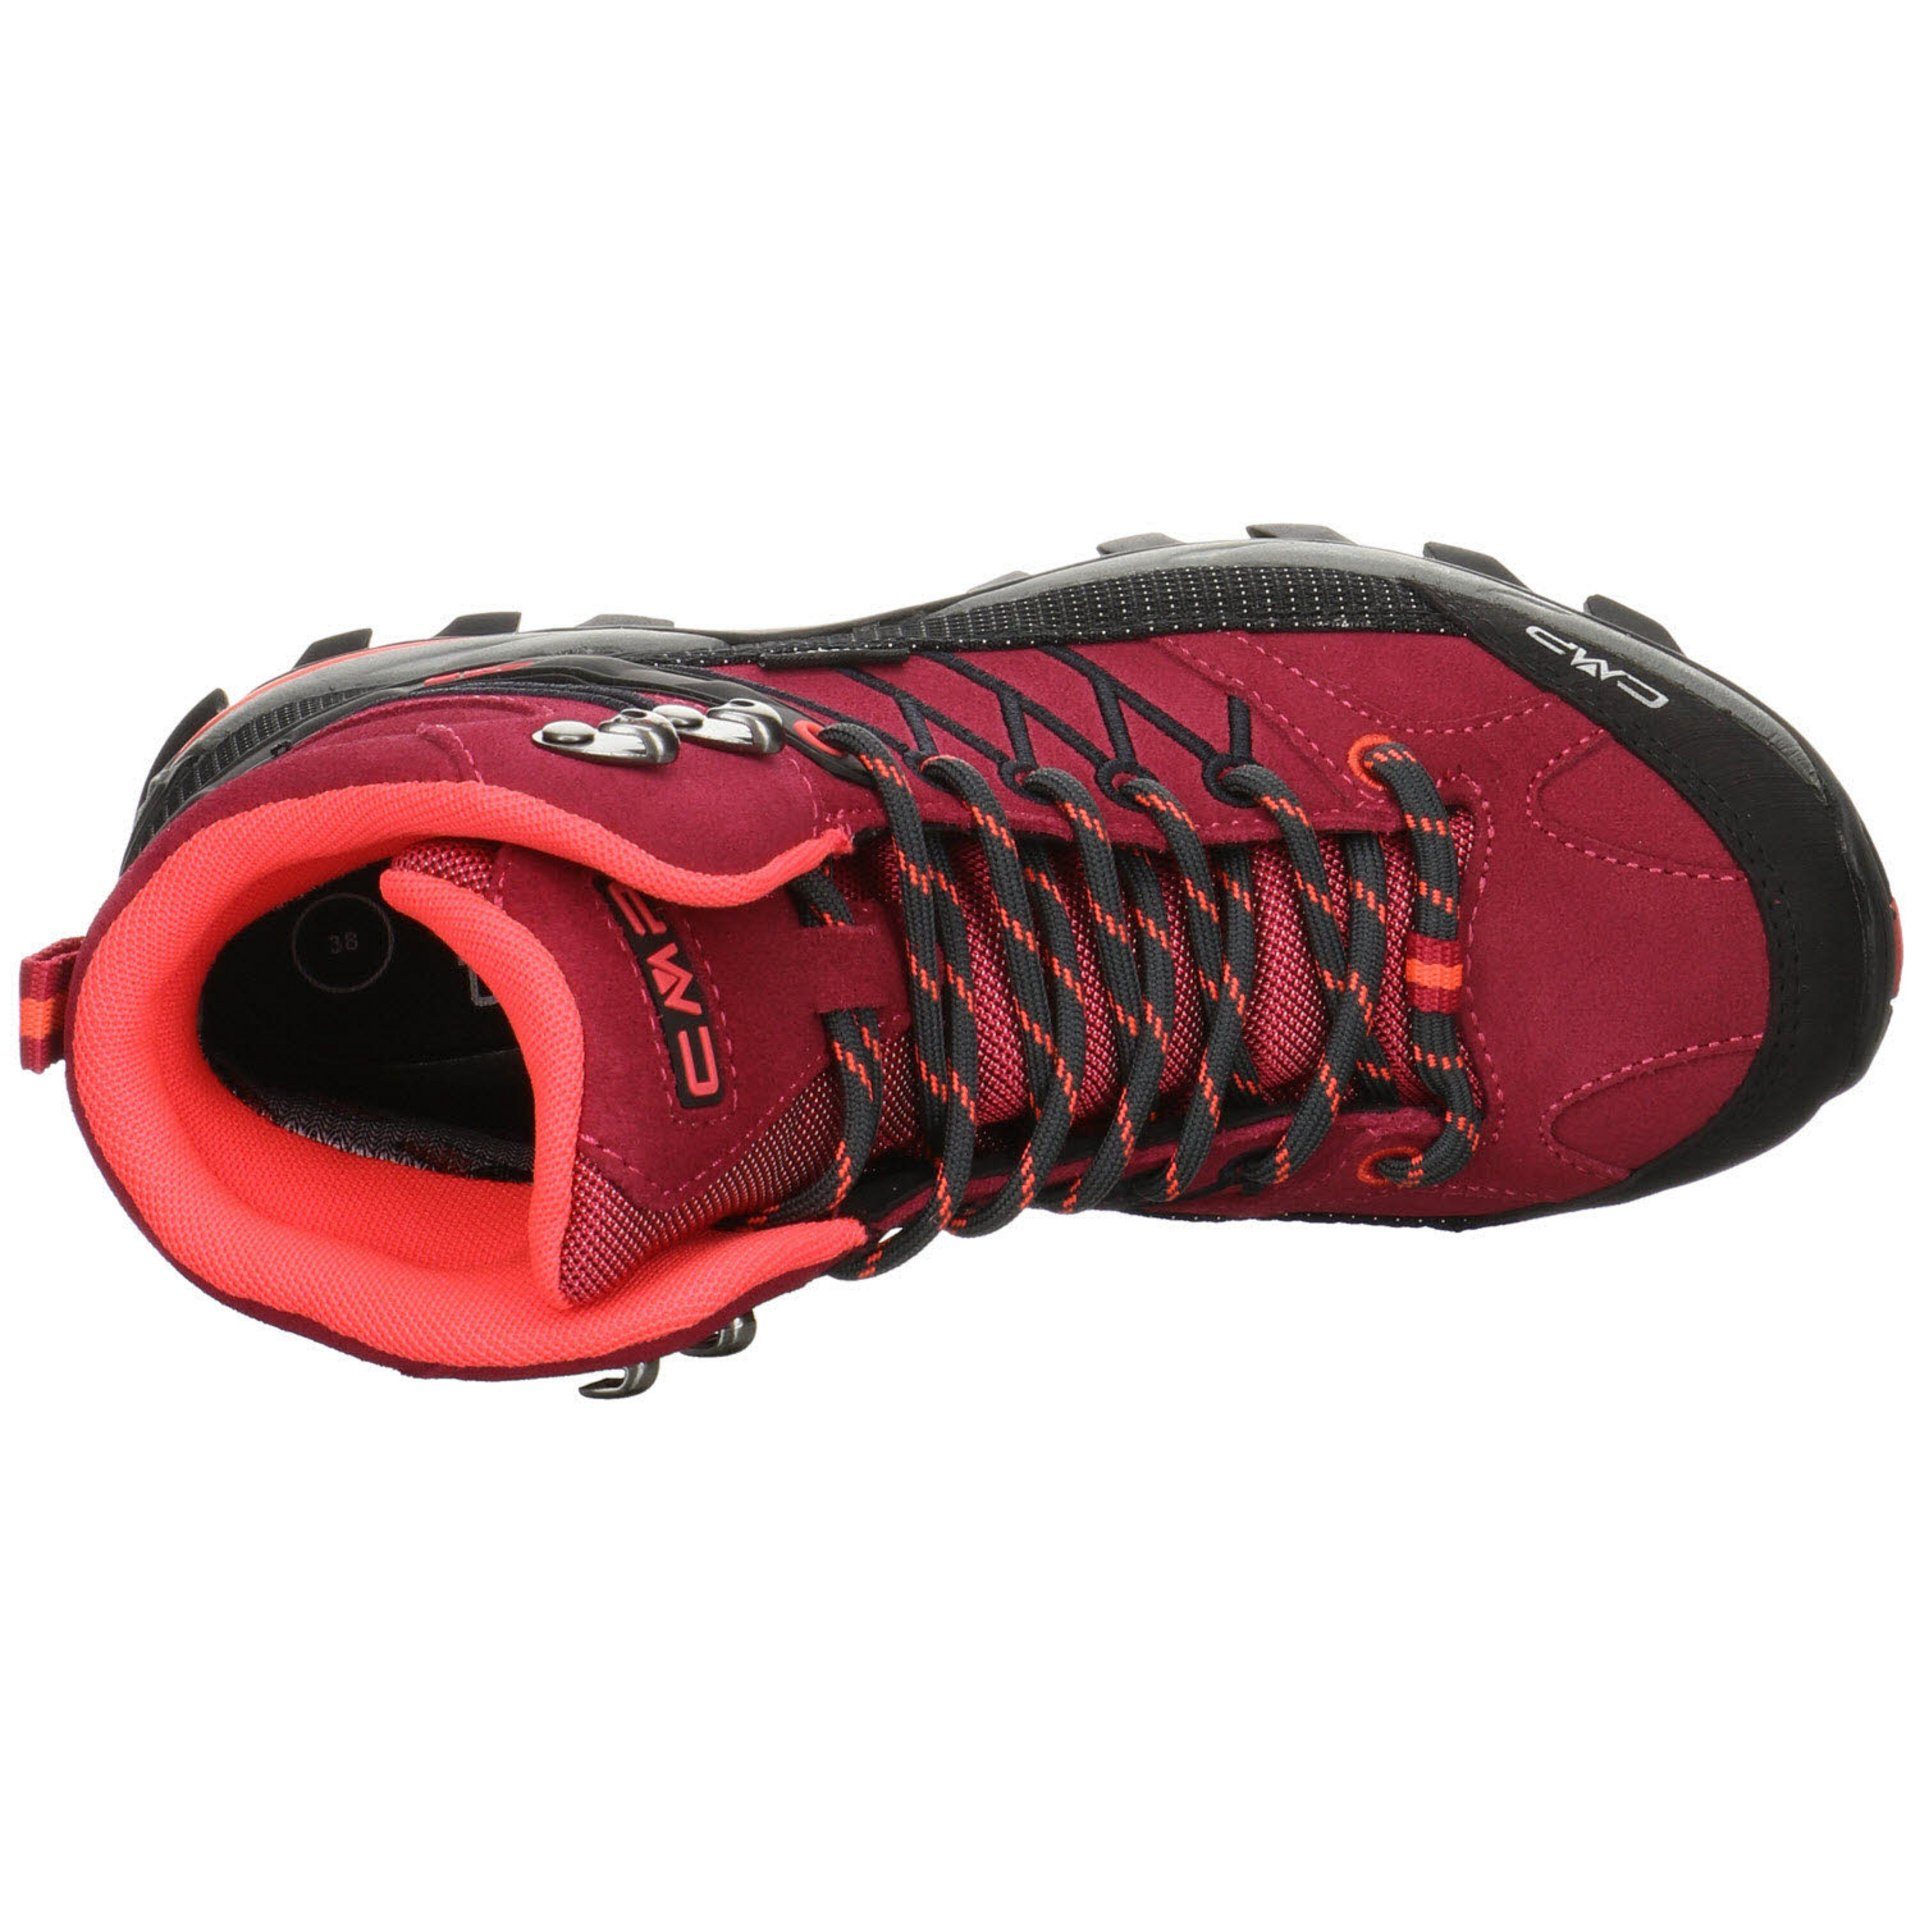 CMP Mid Outdoorschuh MAGENTA-ANTRACITE Outdoorschuh Damen Schuhe Outdoor Rigel Leder-/Textilkombination